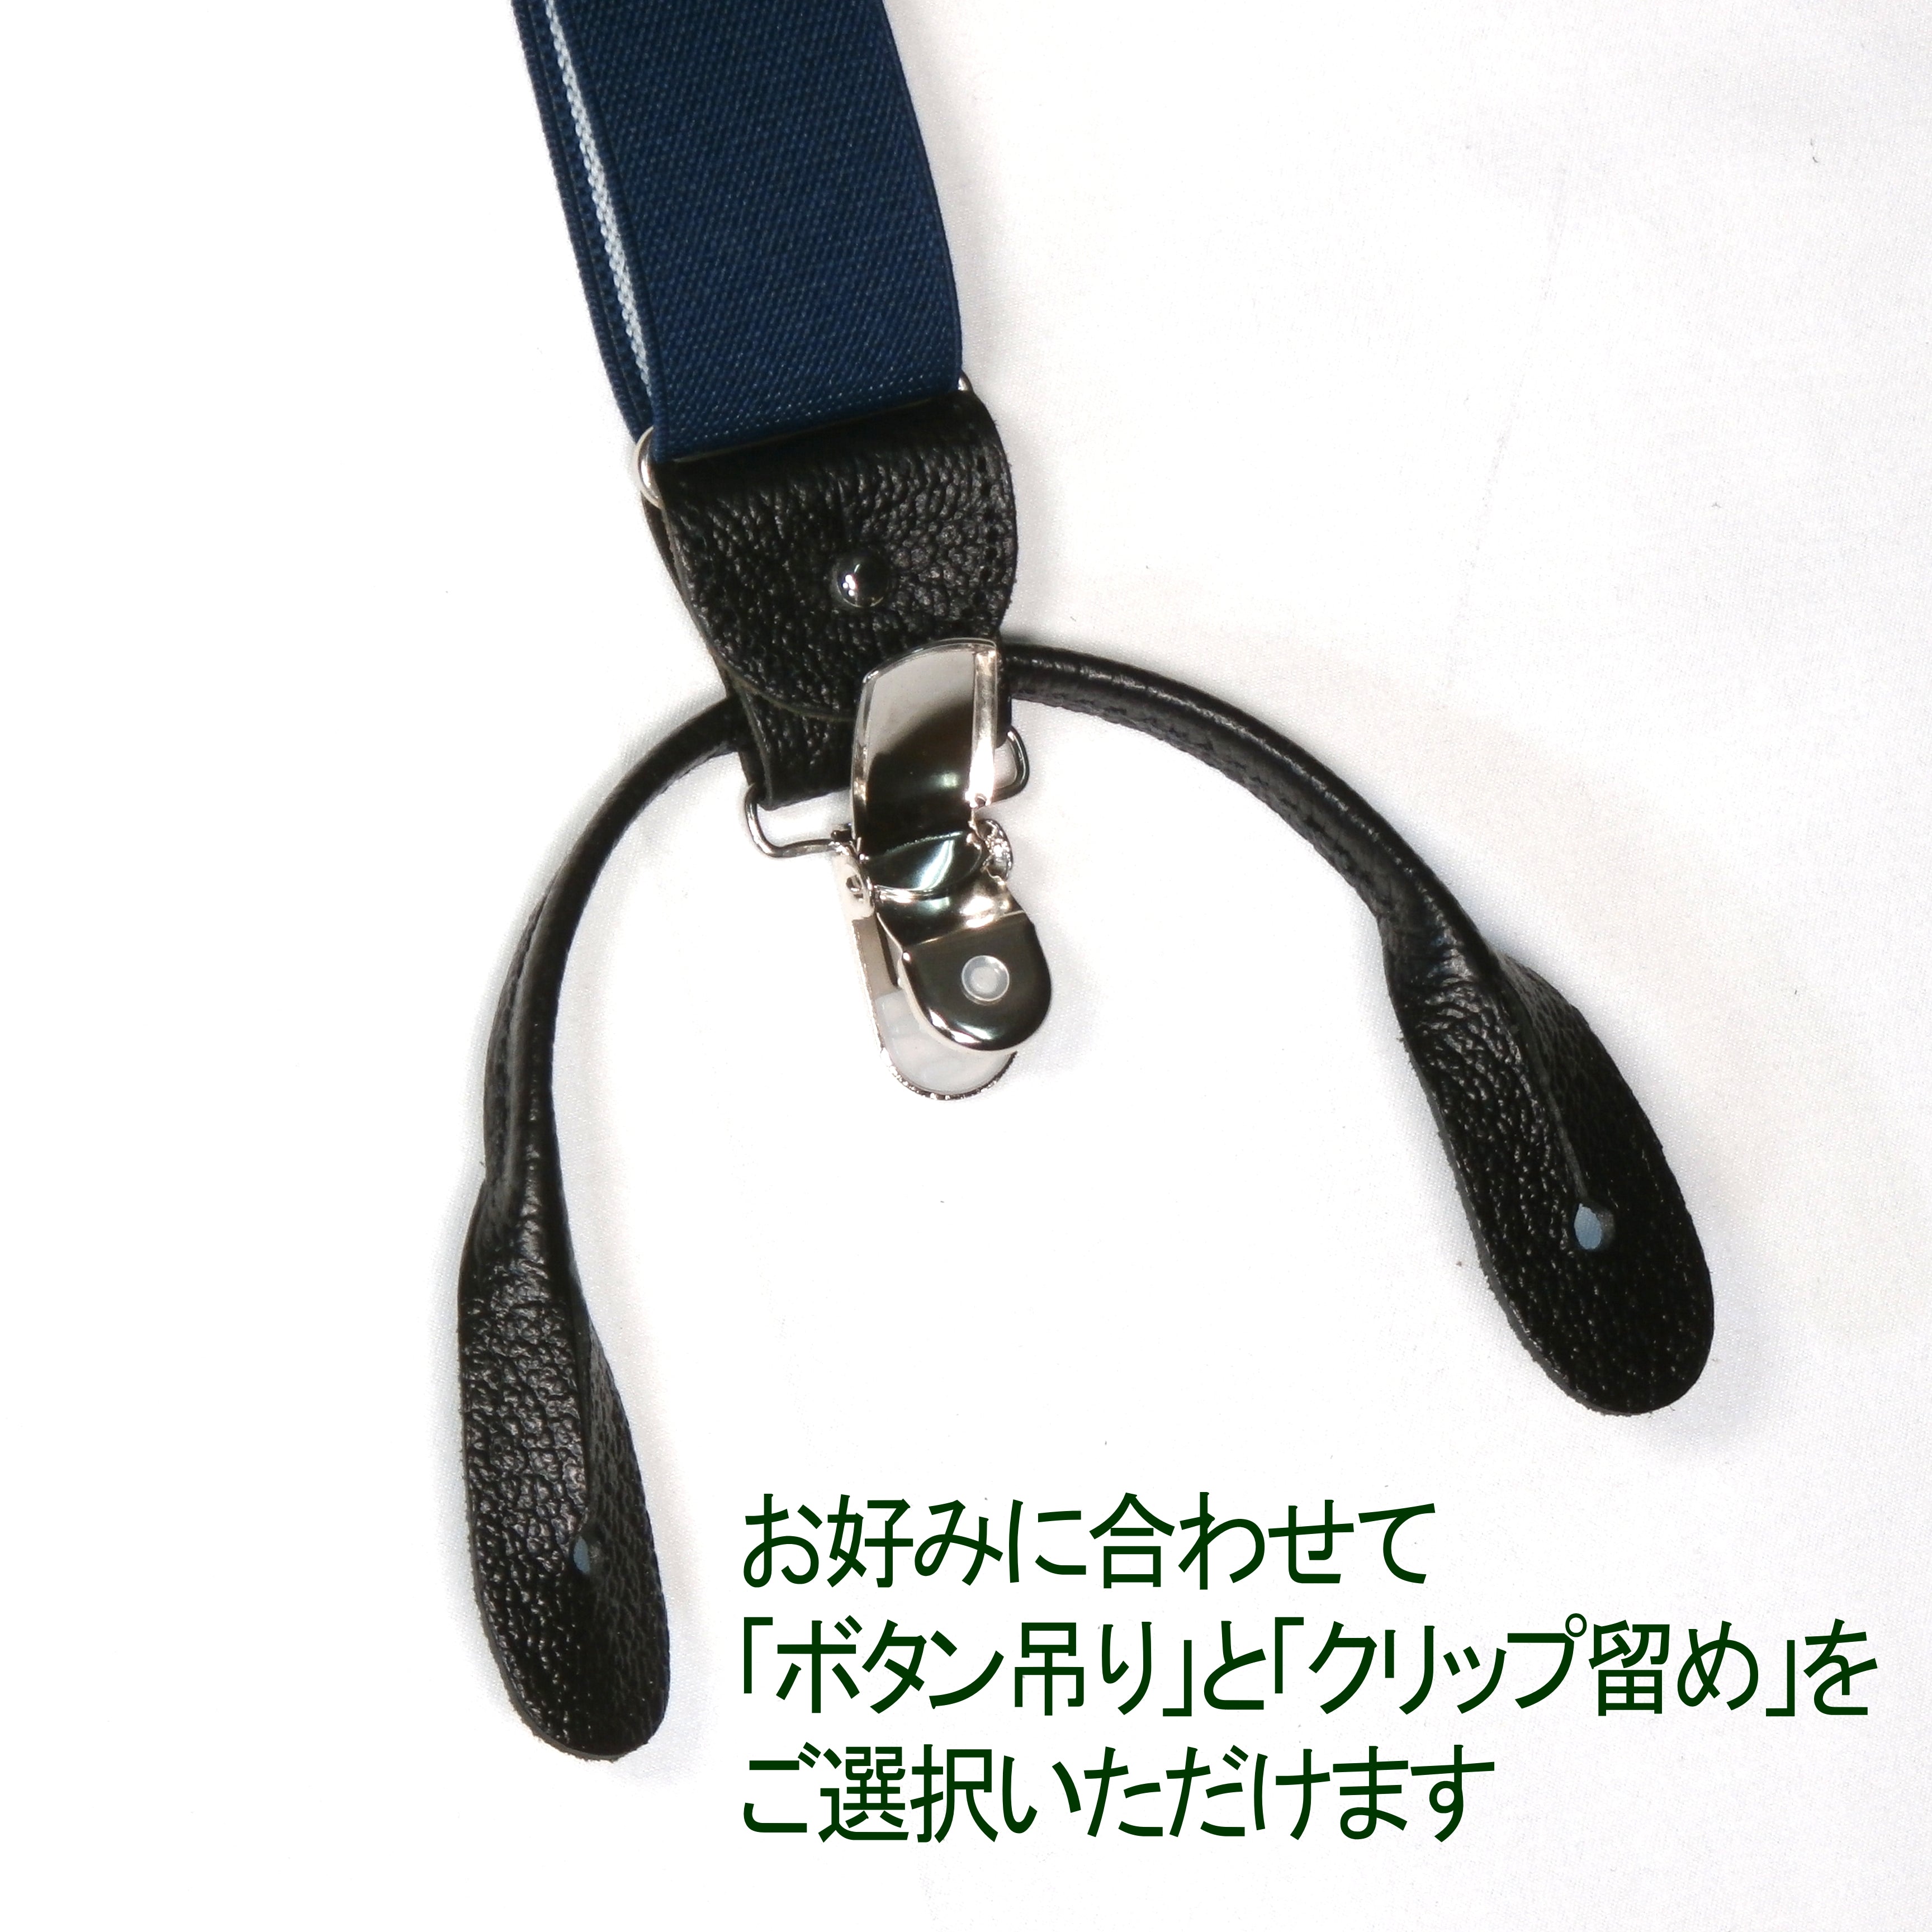 The Brace = 2 way suspender =